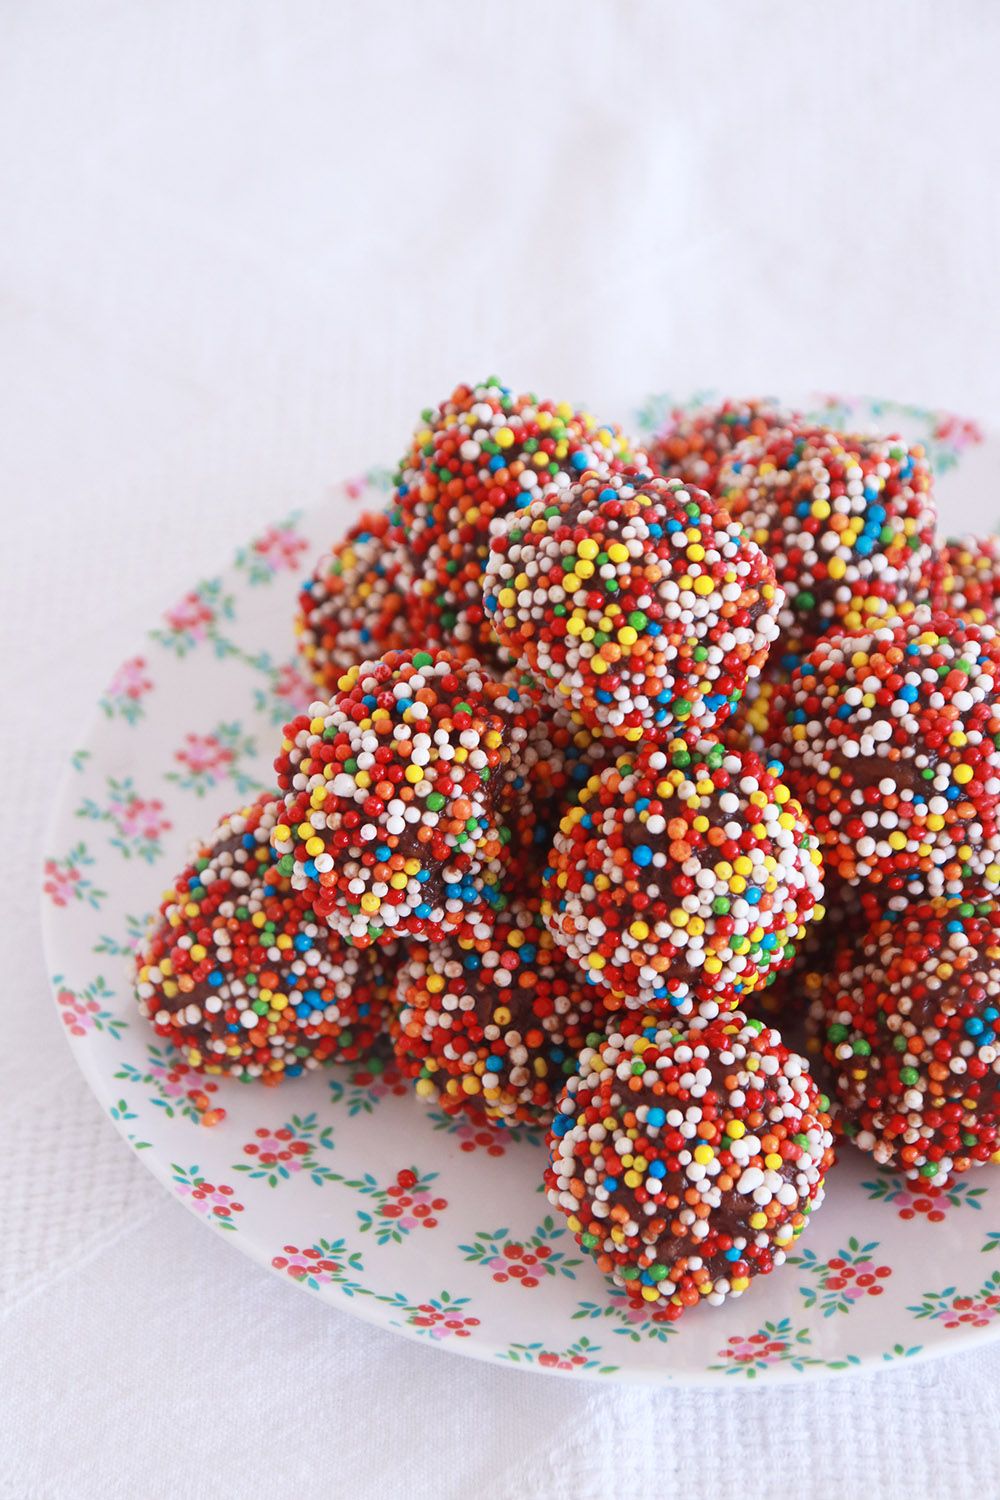 3 Ingredients Chocolate Bliss Balls | Photo: Natalie Levin